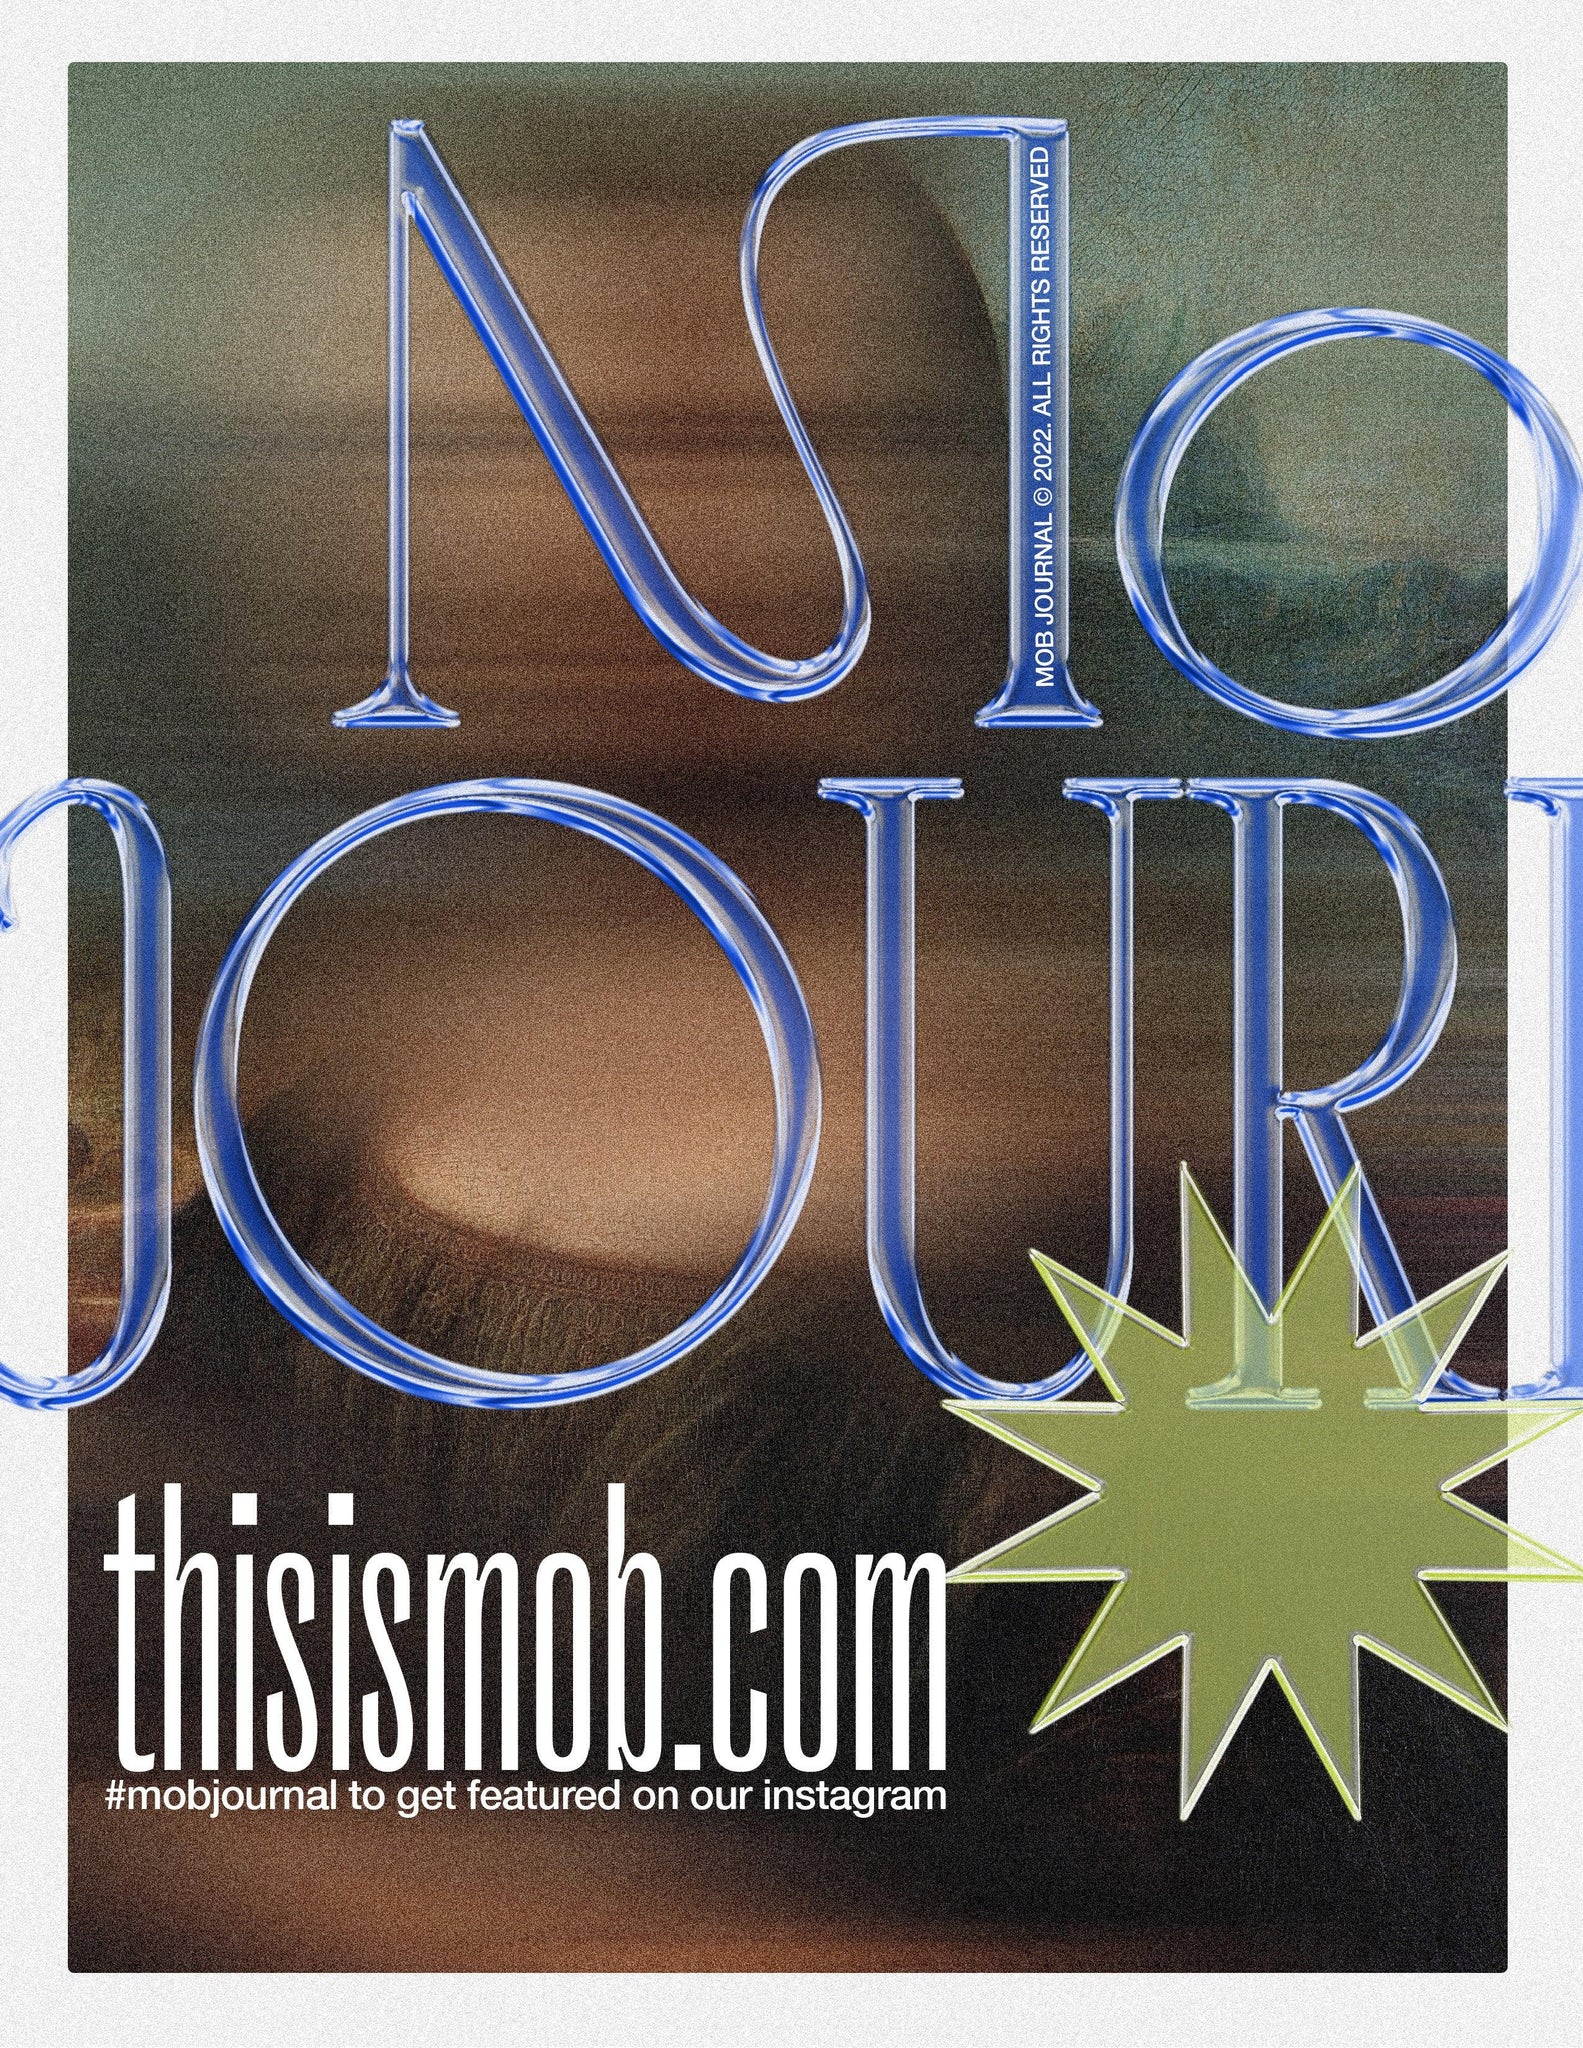 MOB JOURNAL | VOLUME TWENTY SIX | ISSUE #05 - Mob Journal